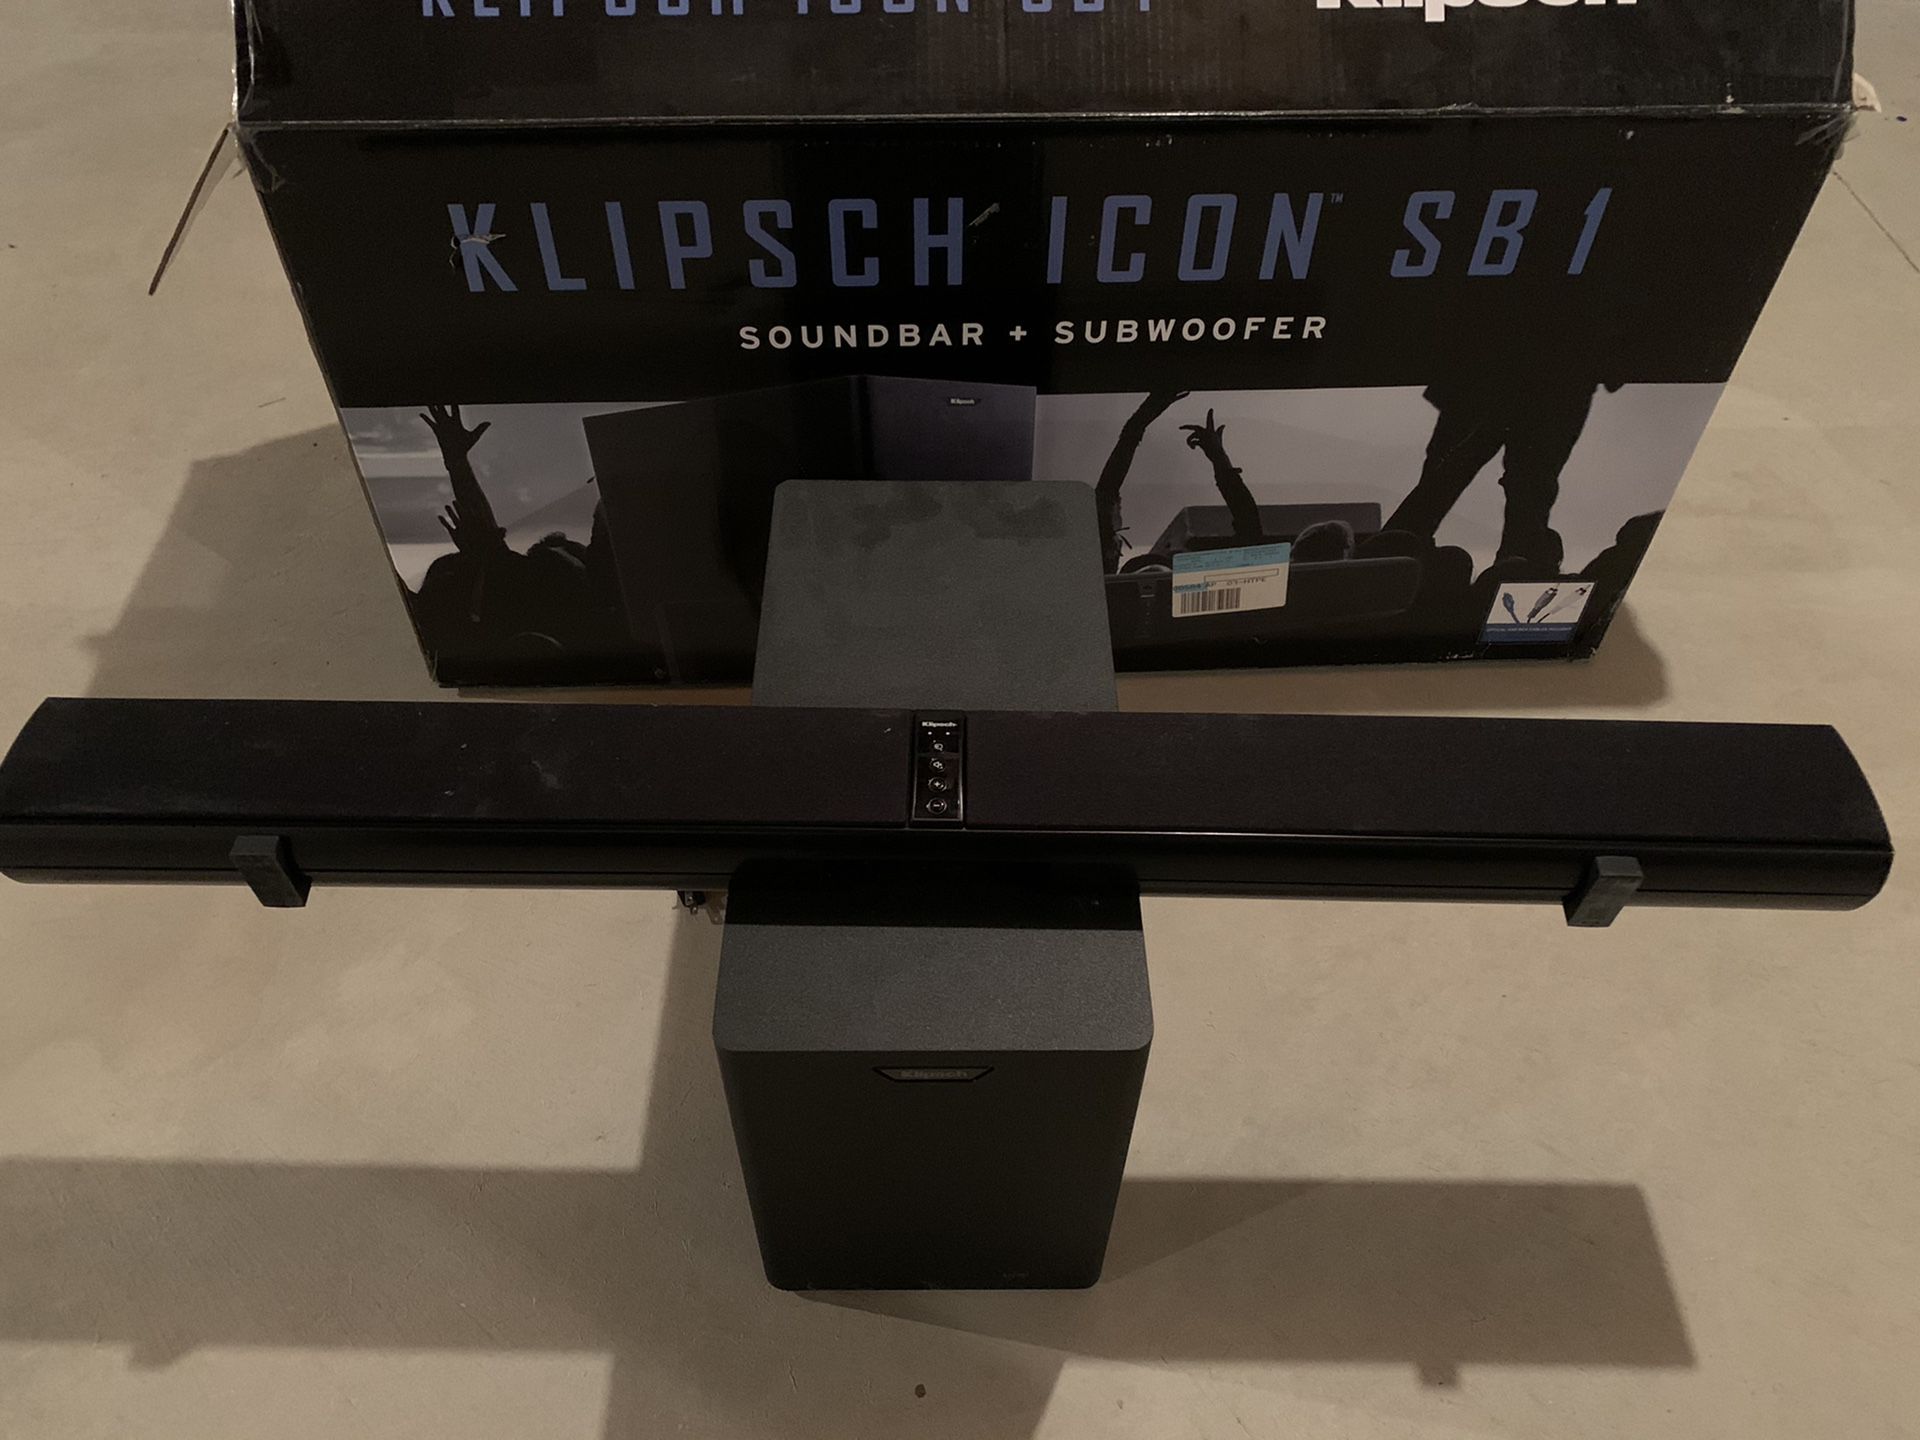 Klipsch Icon SB1 Soundbar and Subwoofer